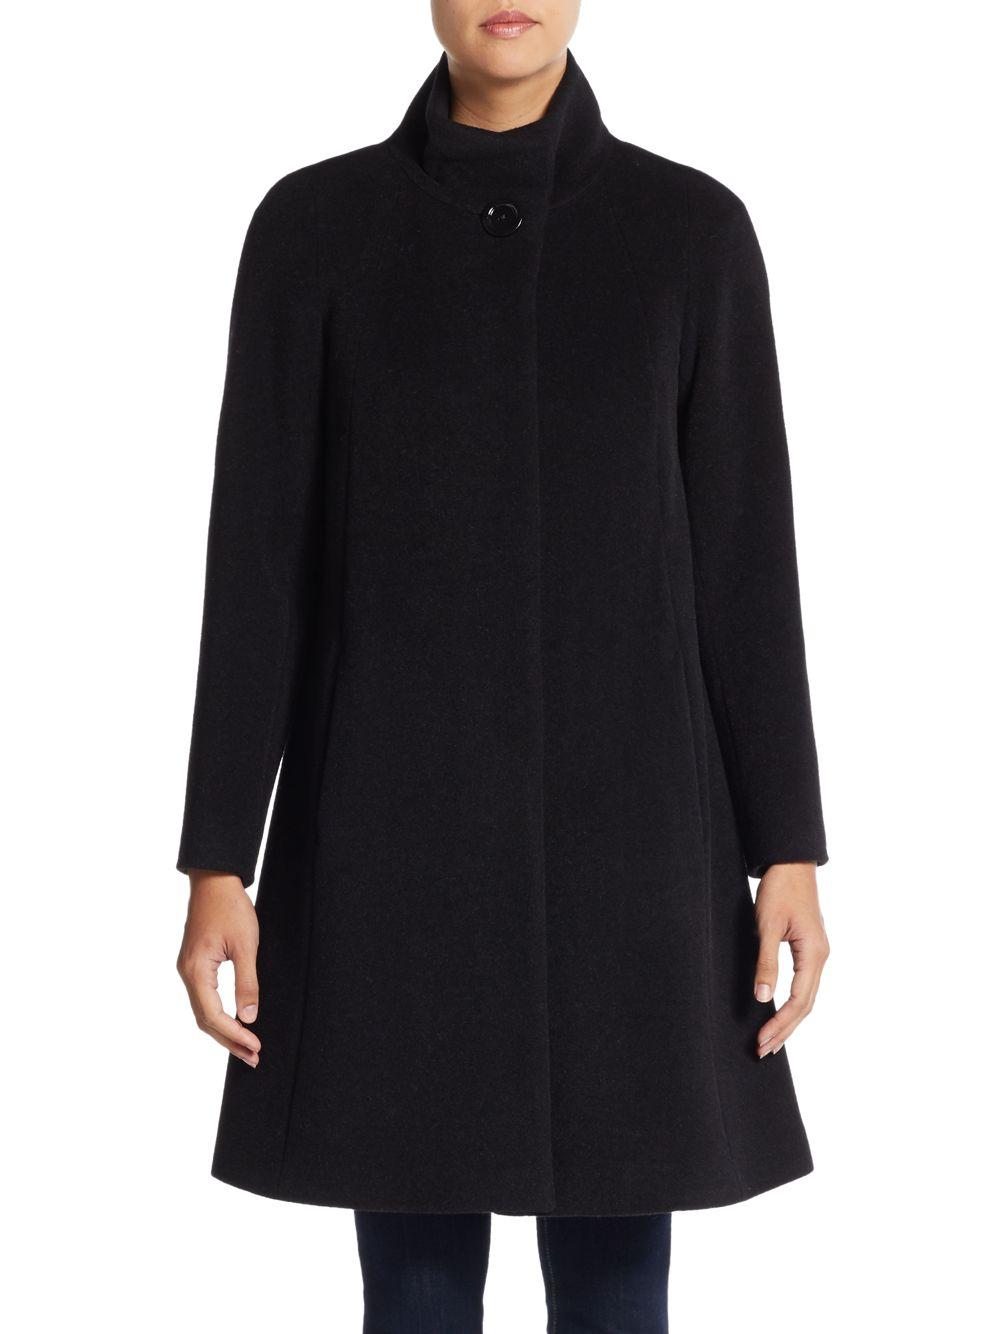 Cinzia Rocca Suri Alpaca-blend Coat in Black - Lyst